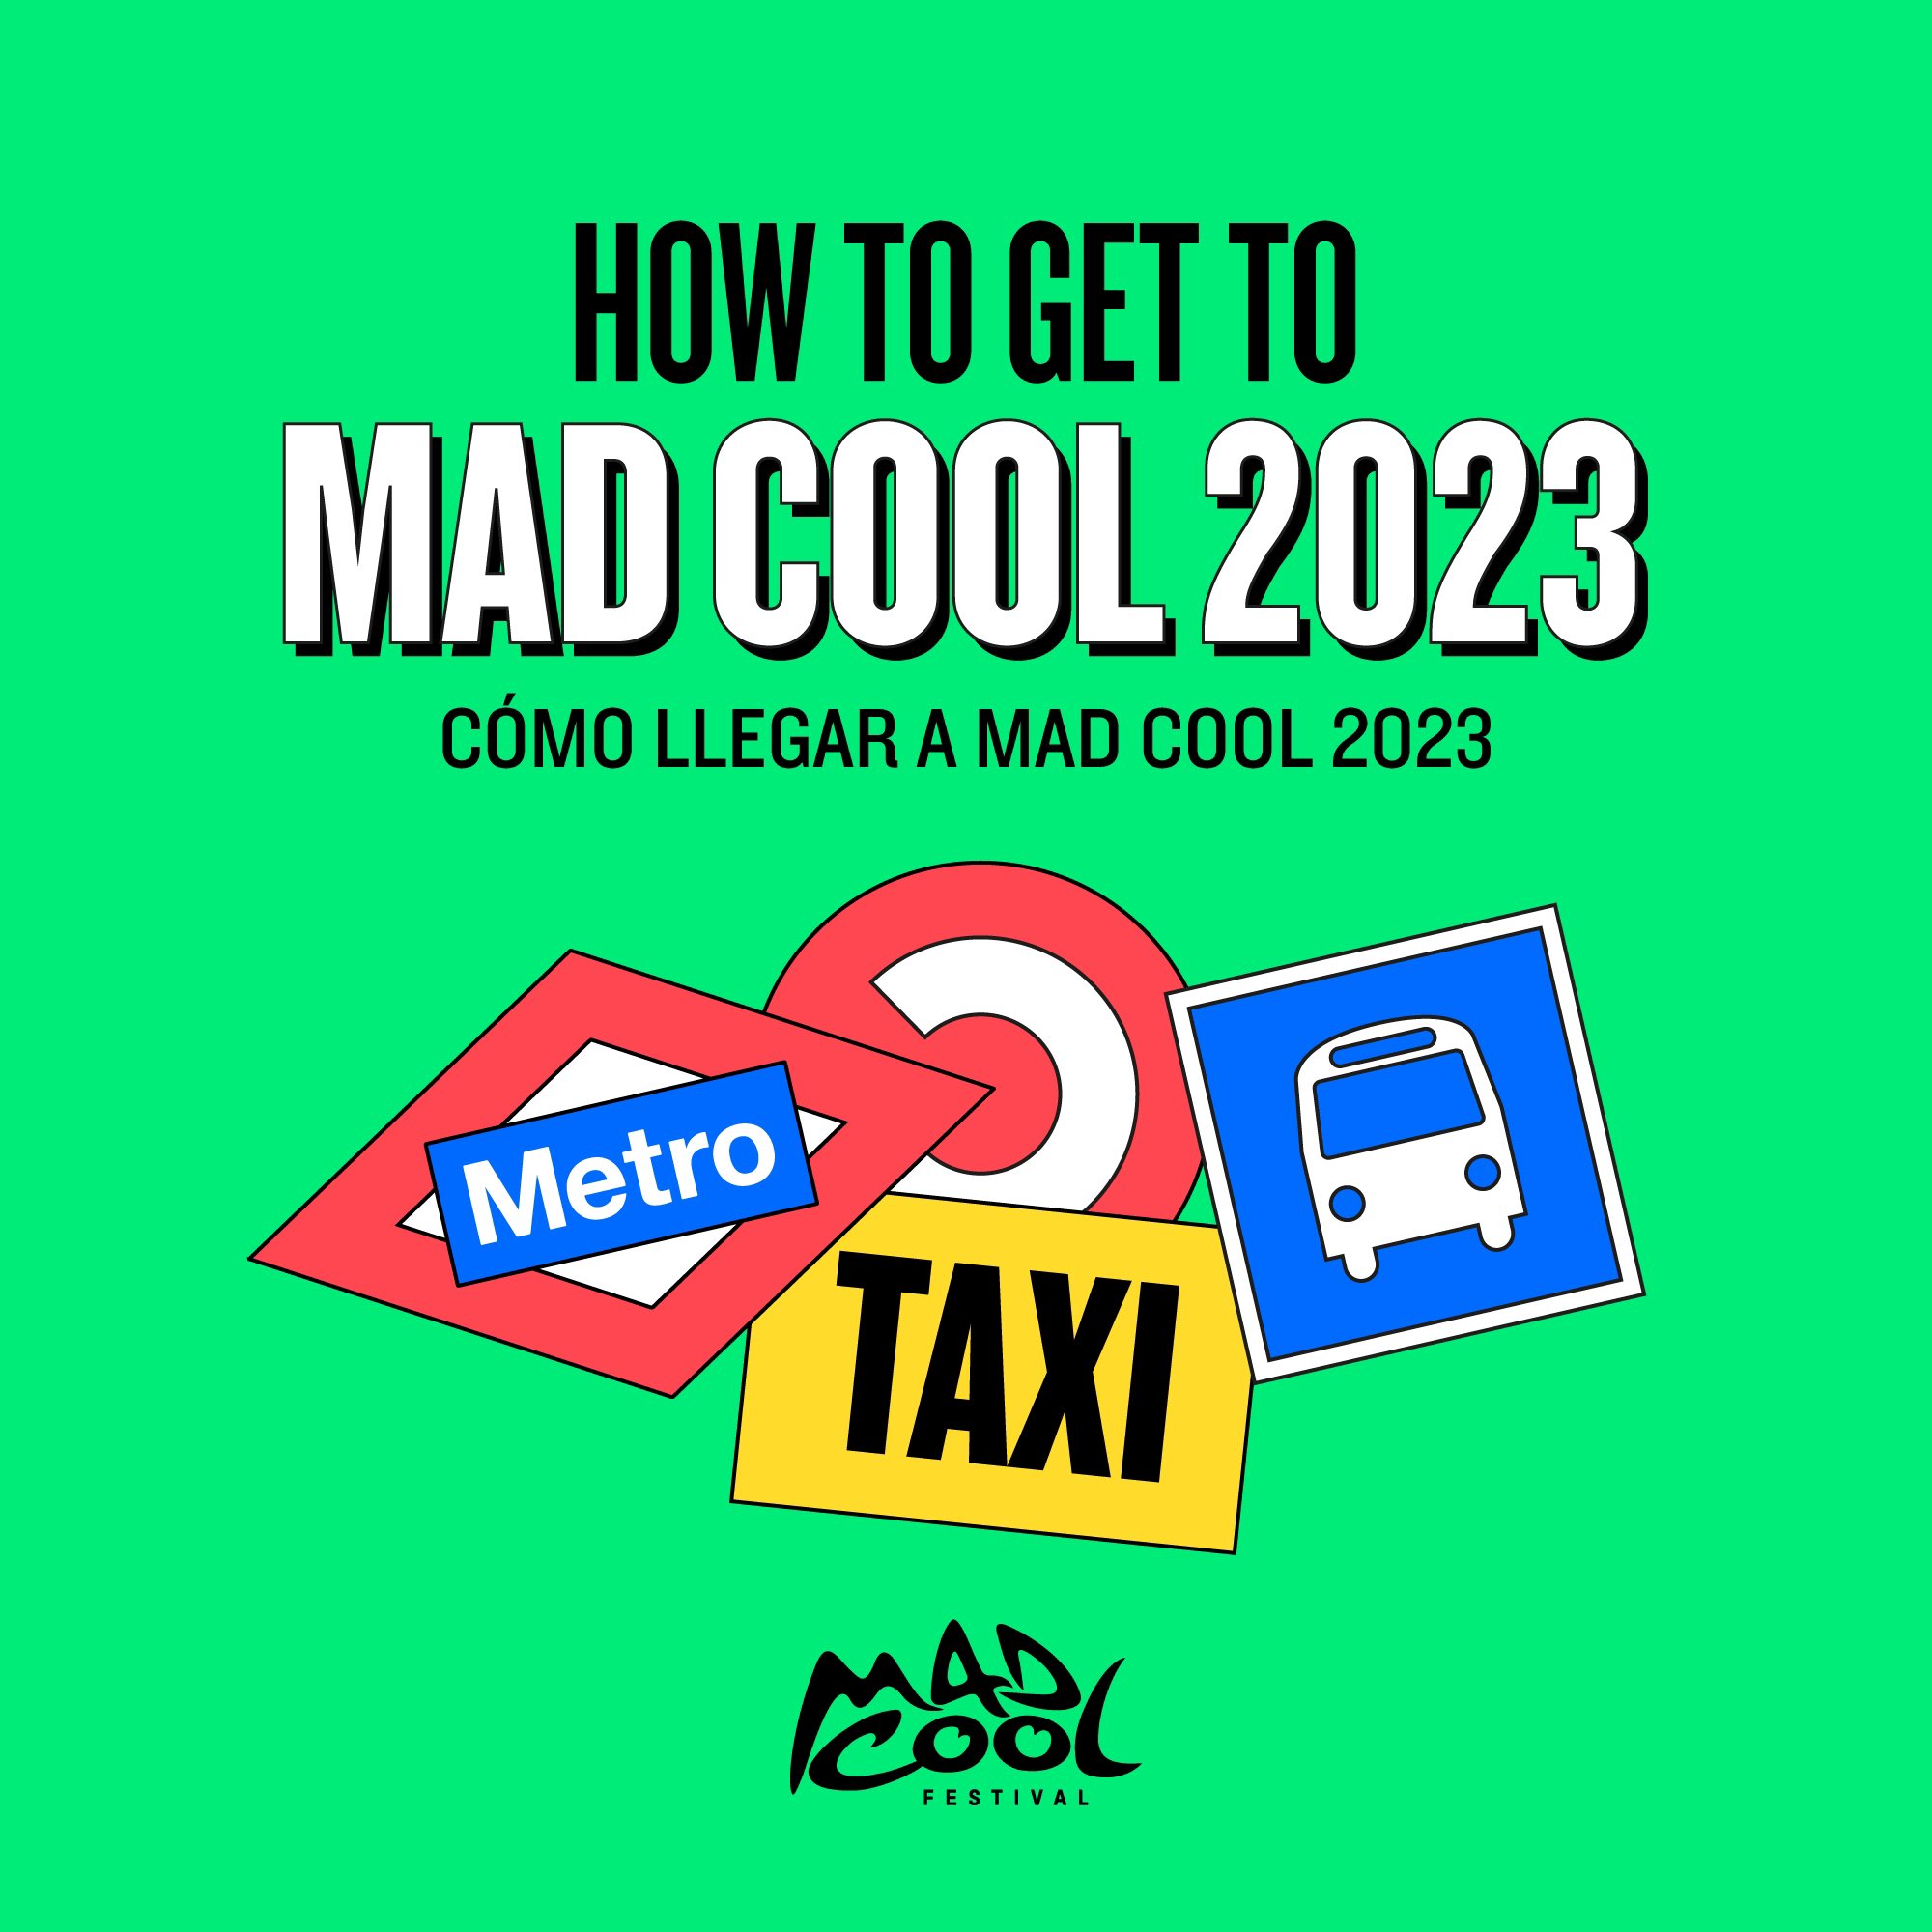 mad cool 2023 transporte